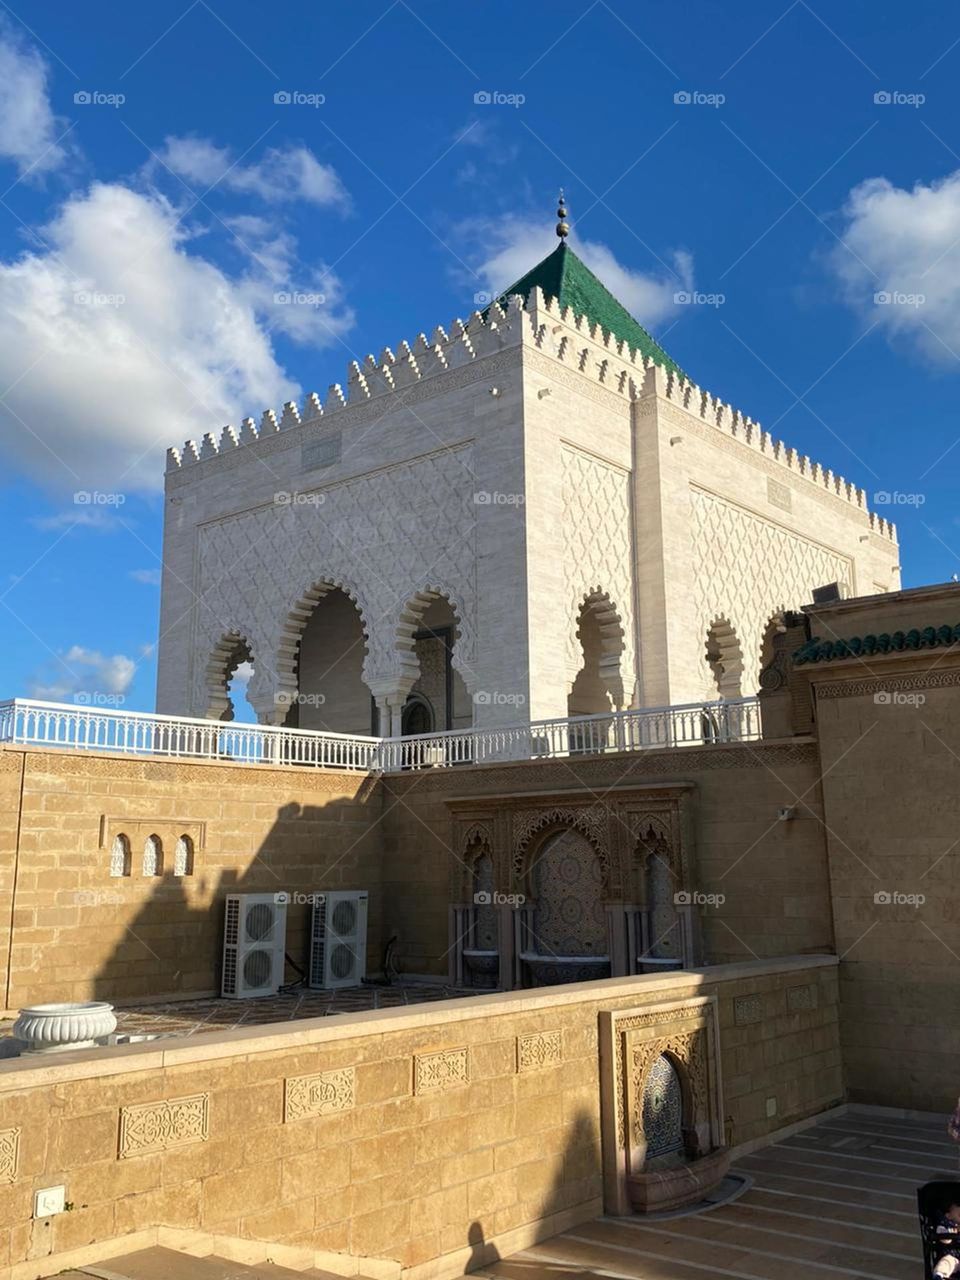 Kings' mausoleum in Rabat